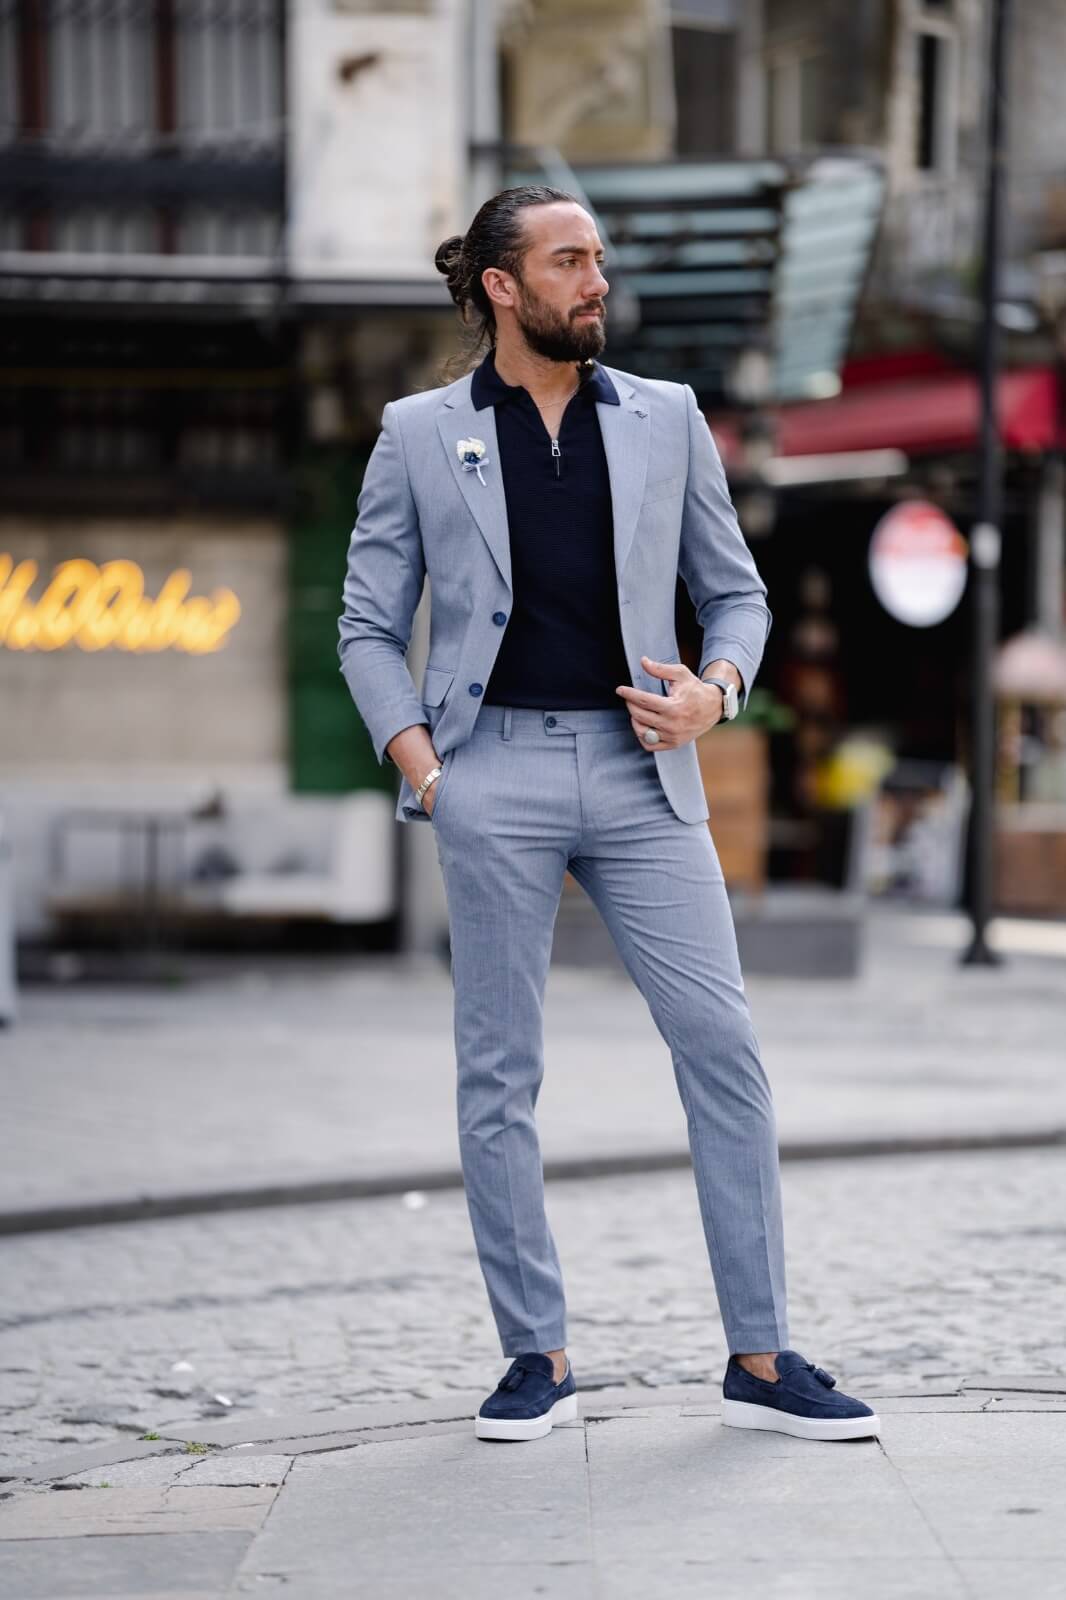 A 2 piece indigo suit for wedding 